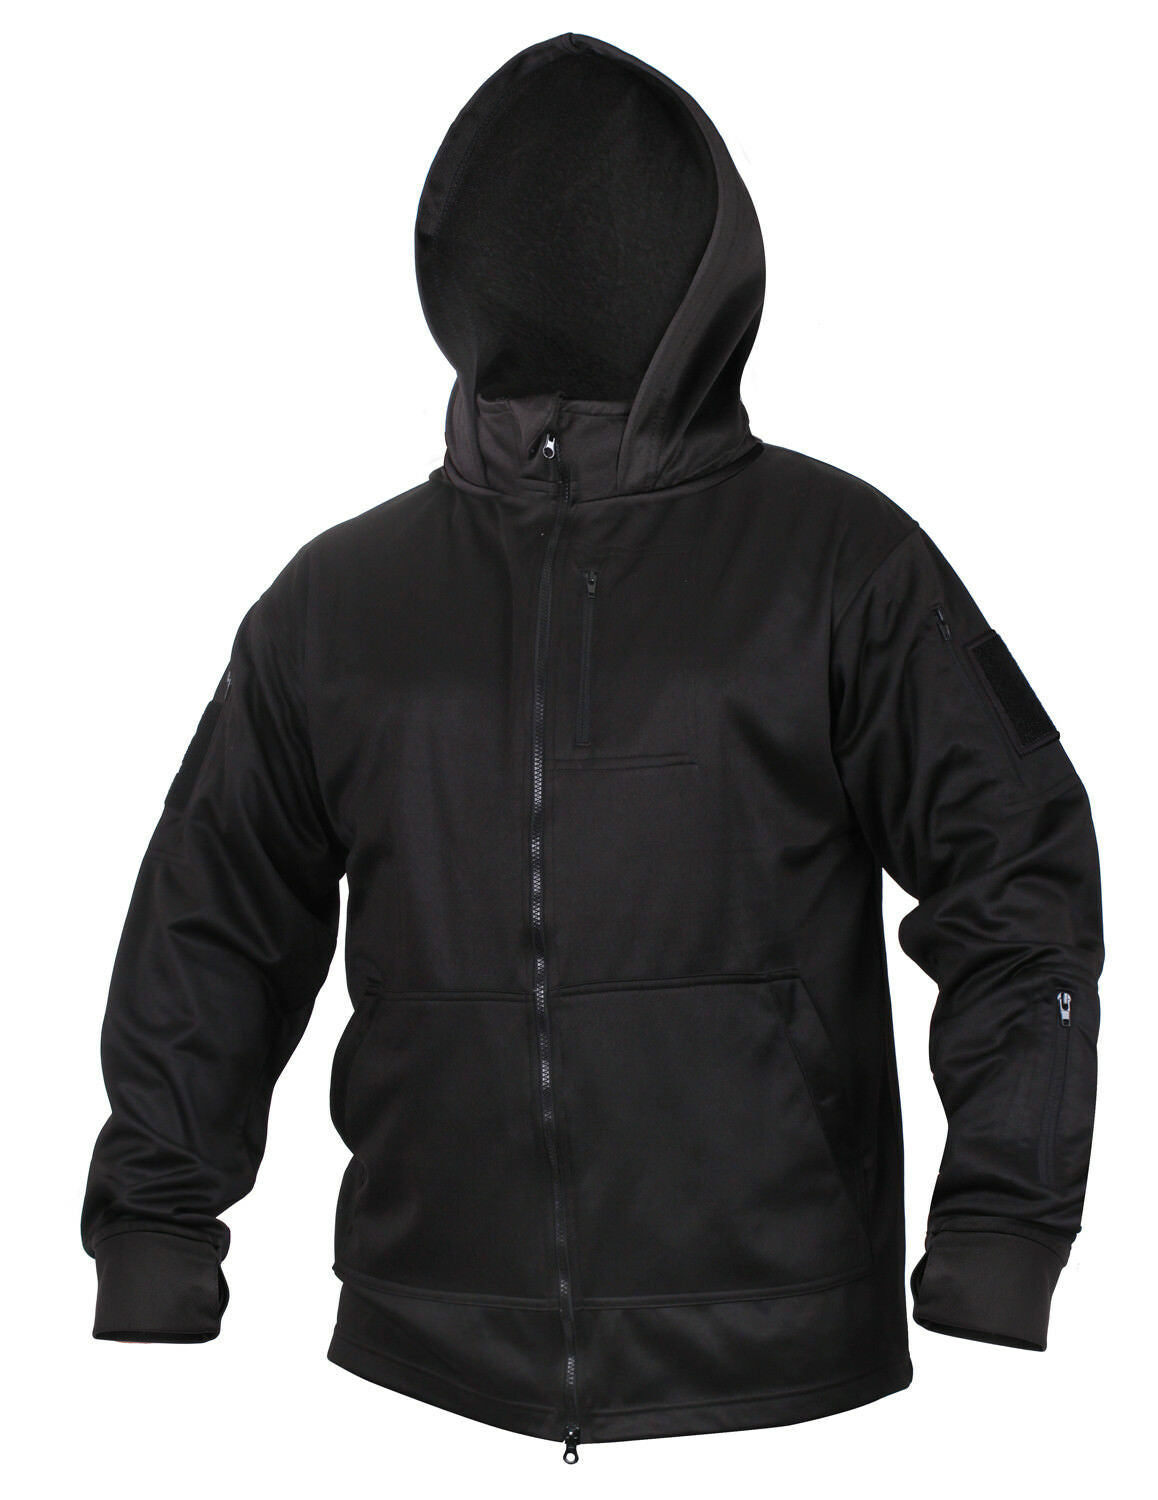 Rothco Thermal Lined Hooded Sweatshirt,Black,Medium